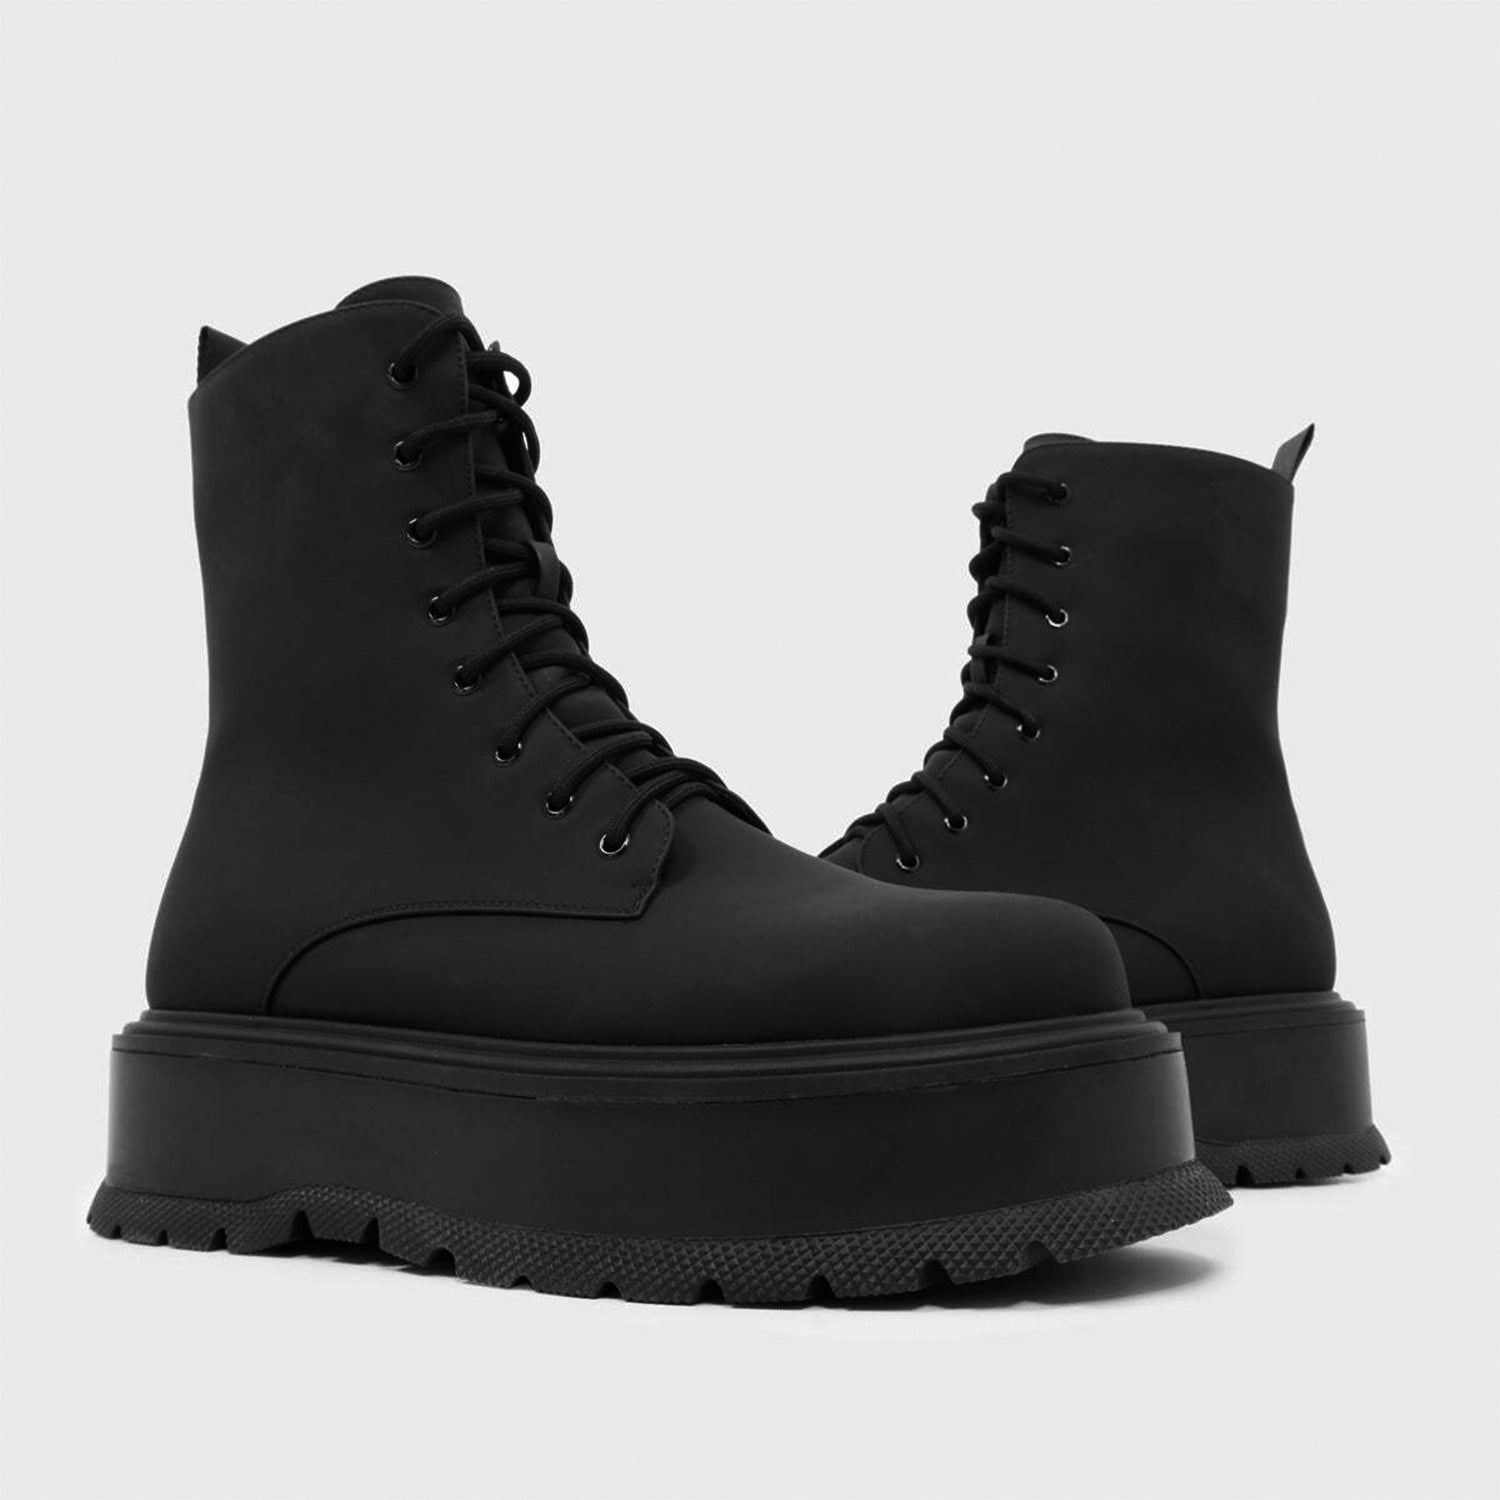 Foundry Men's Platform Ankle Boots - Ankle Boots - KOI Footwear - Black - Platform Detail